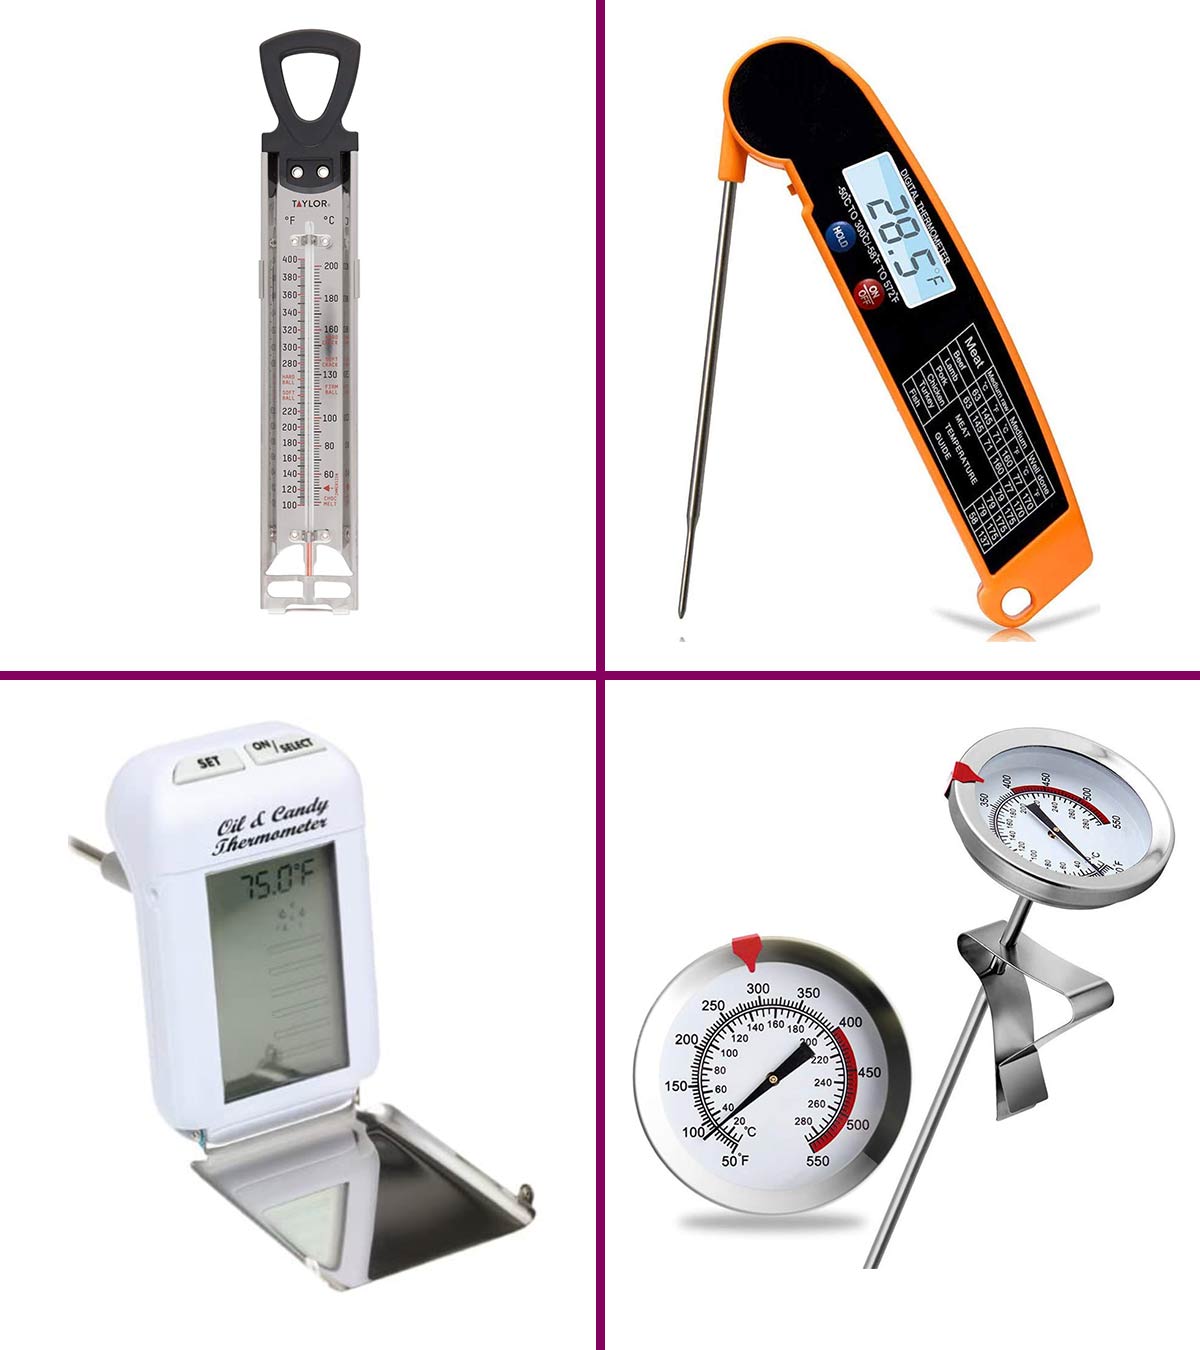 Kuluner TP-01 Waterproof Digital Instant Red Meat Thermometer